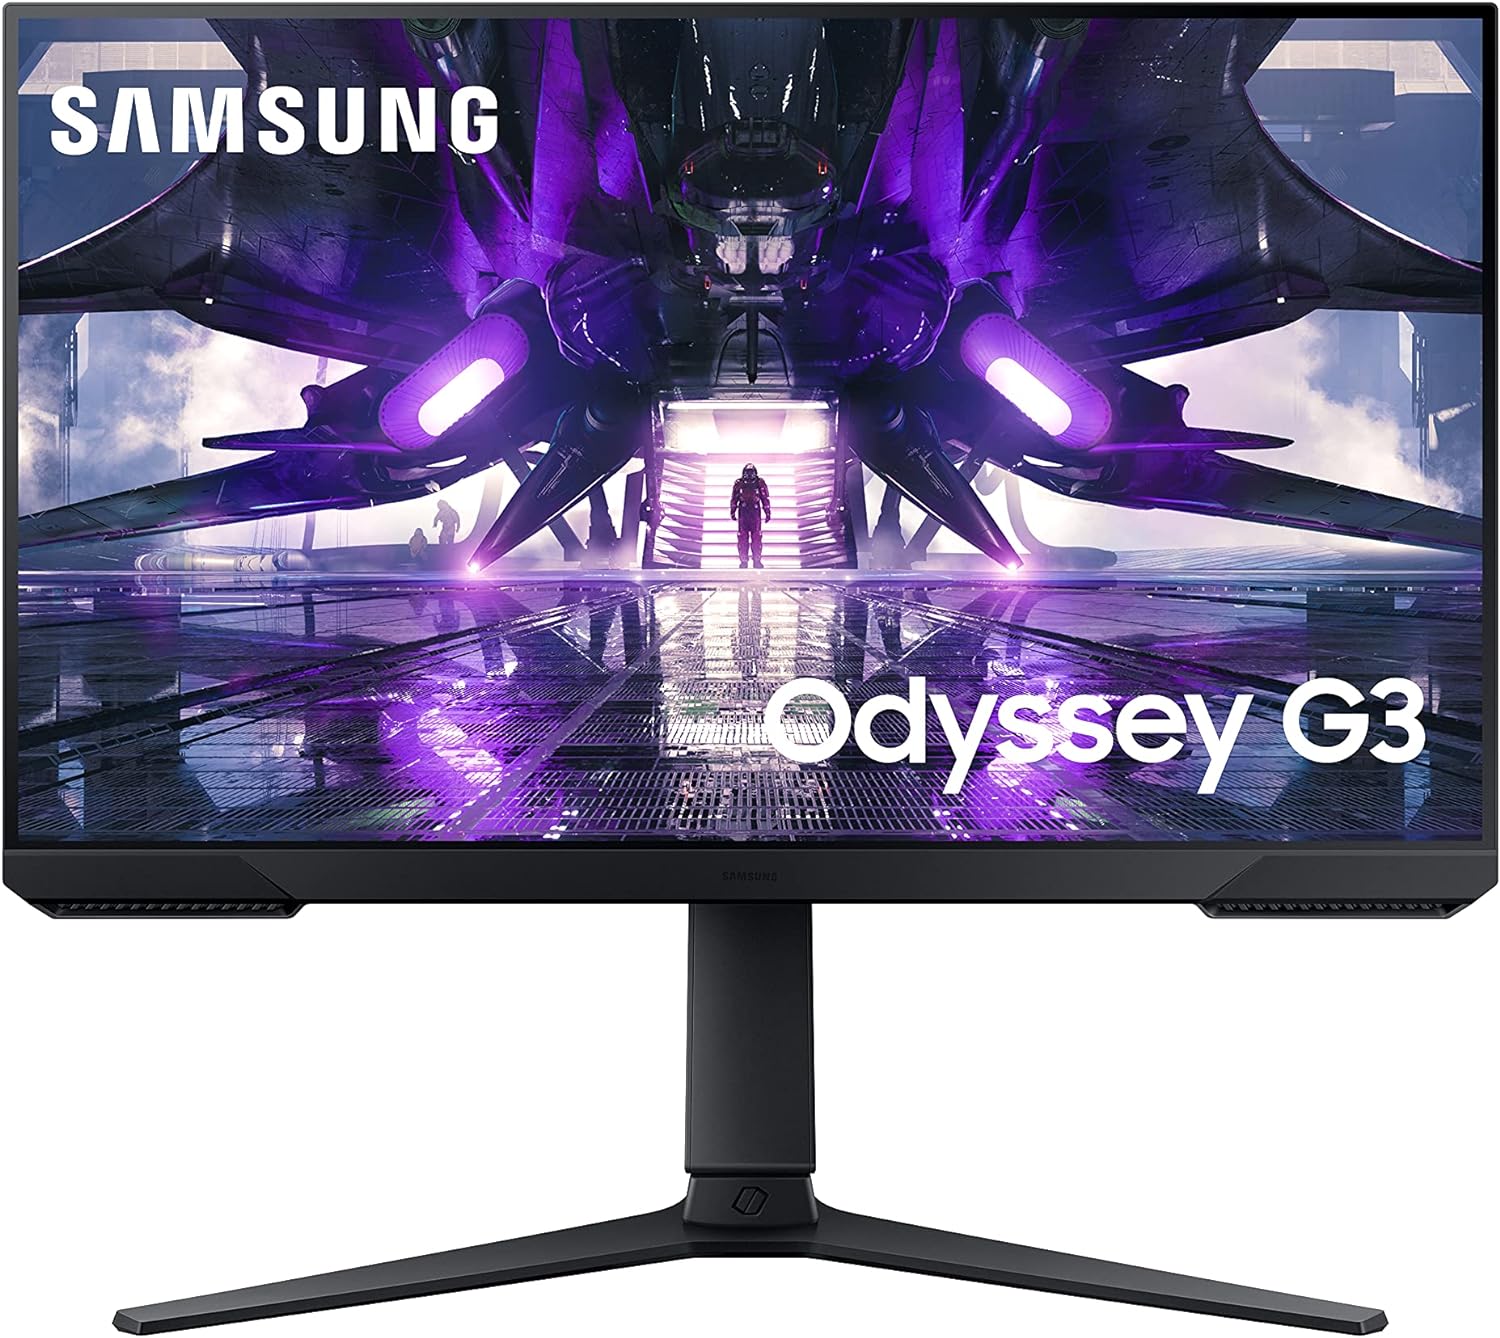 SAMSUNG Odyssey G3 24-Inch Gaming Monitor, 144hz,HDMI